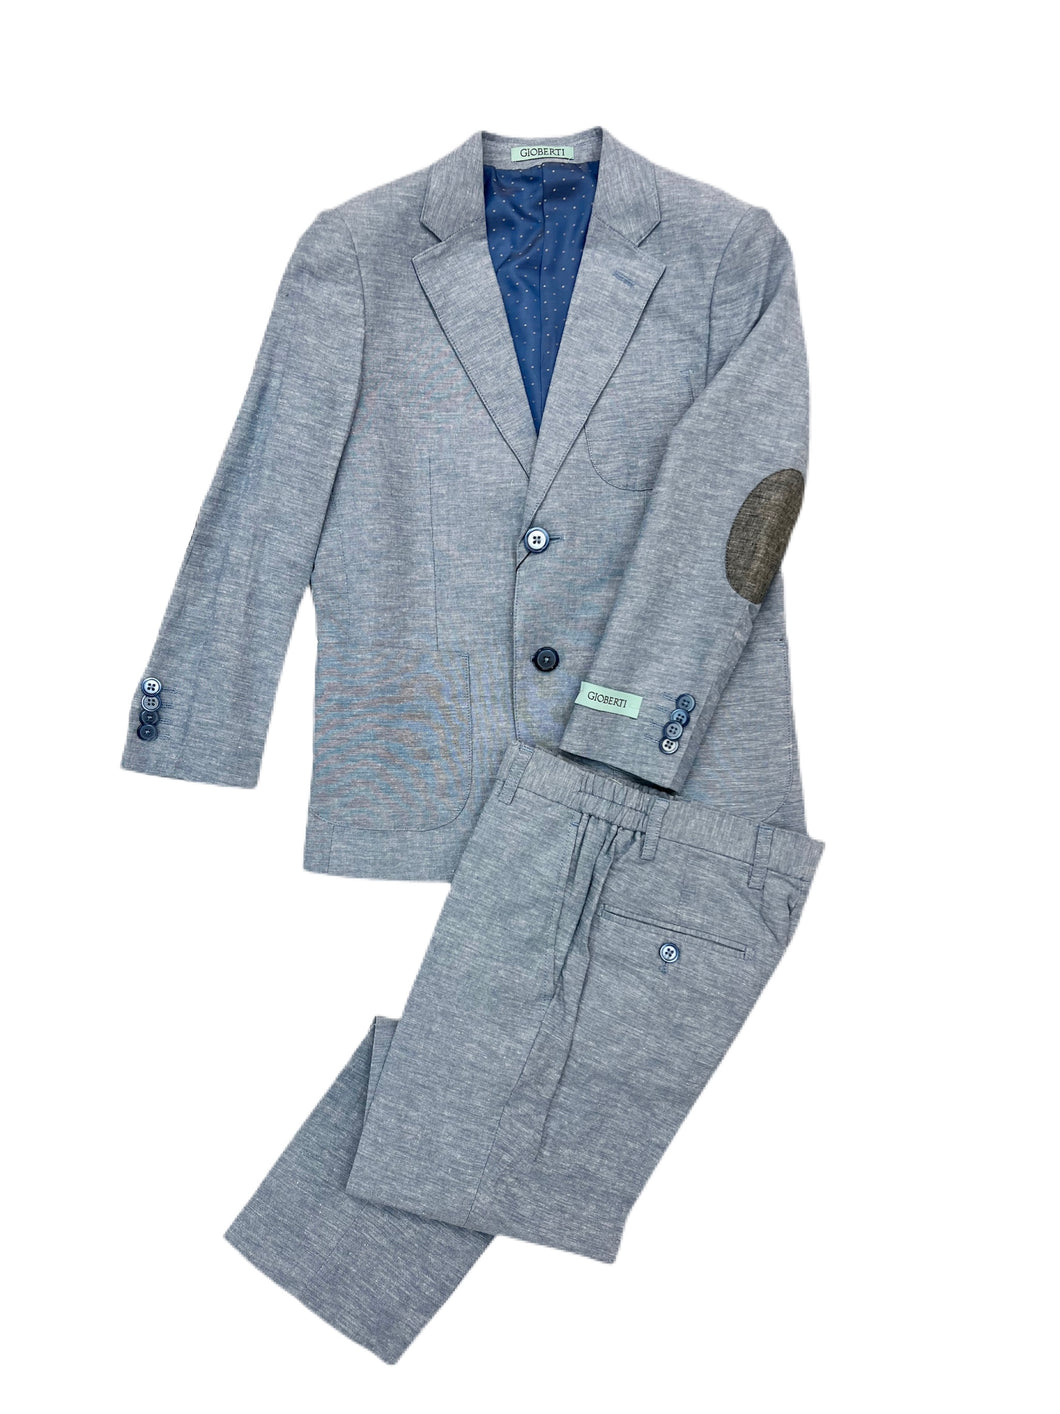 Magen Kids Blue Linen Suit